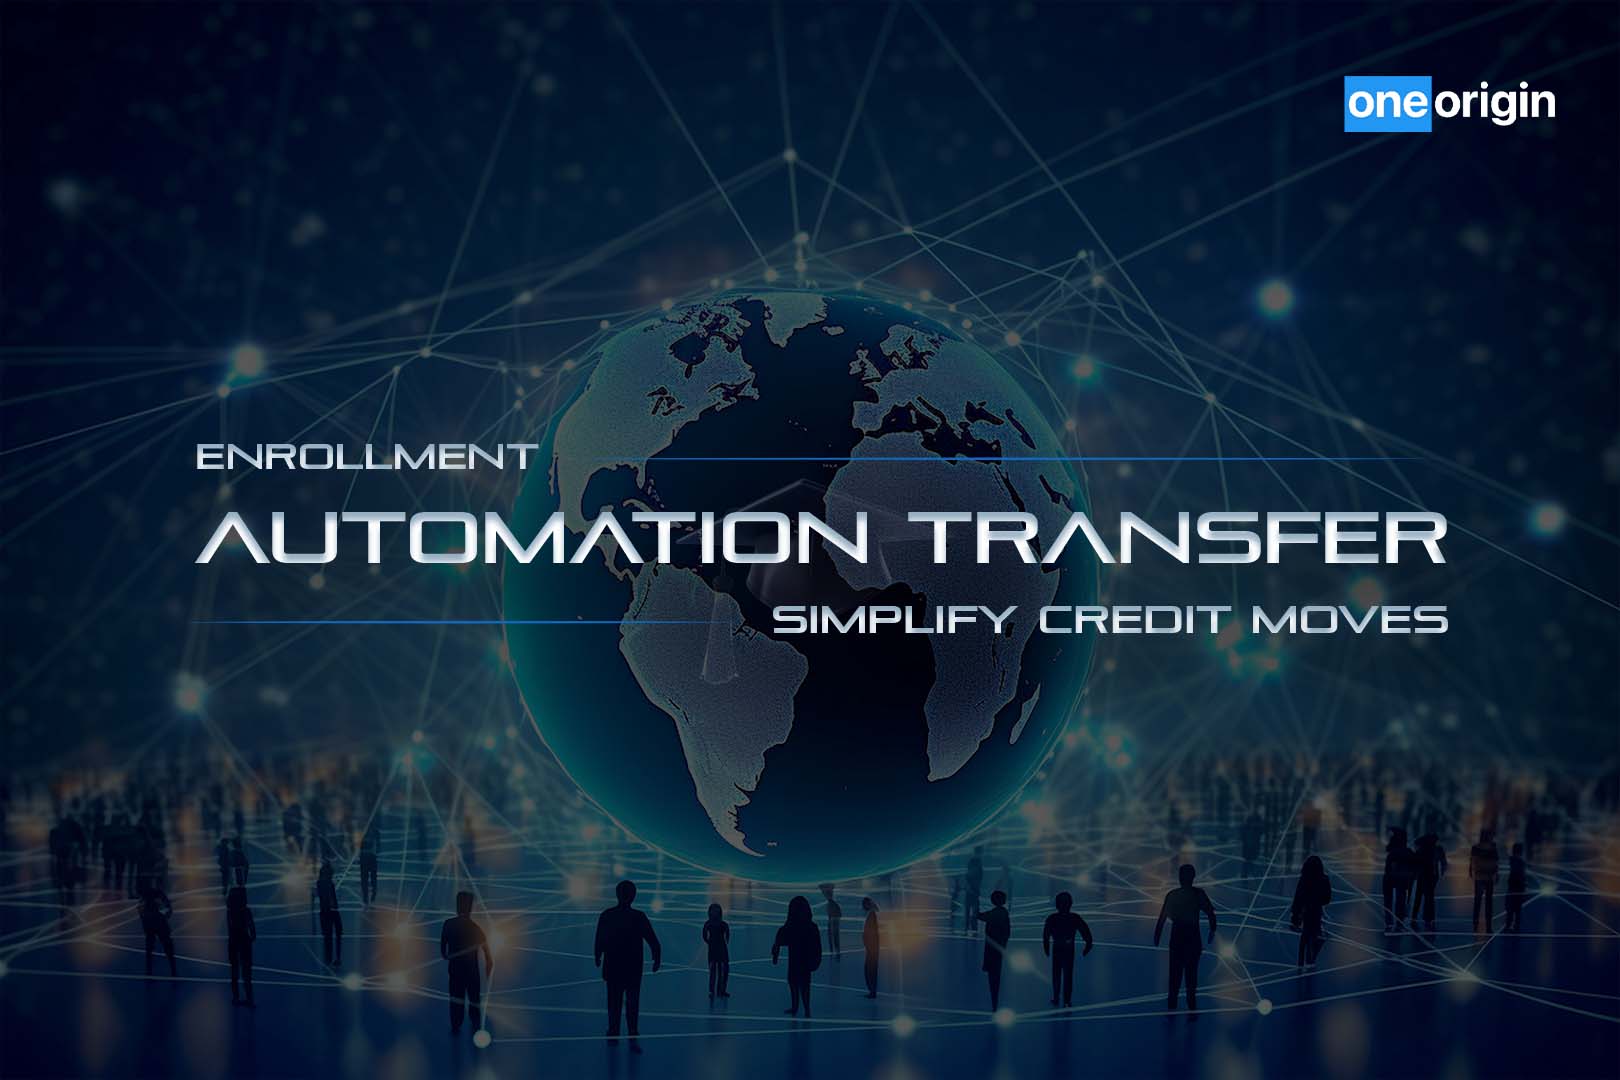 Enrollment Automation Transfer